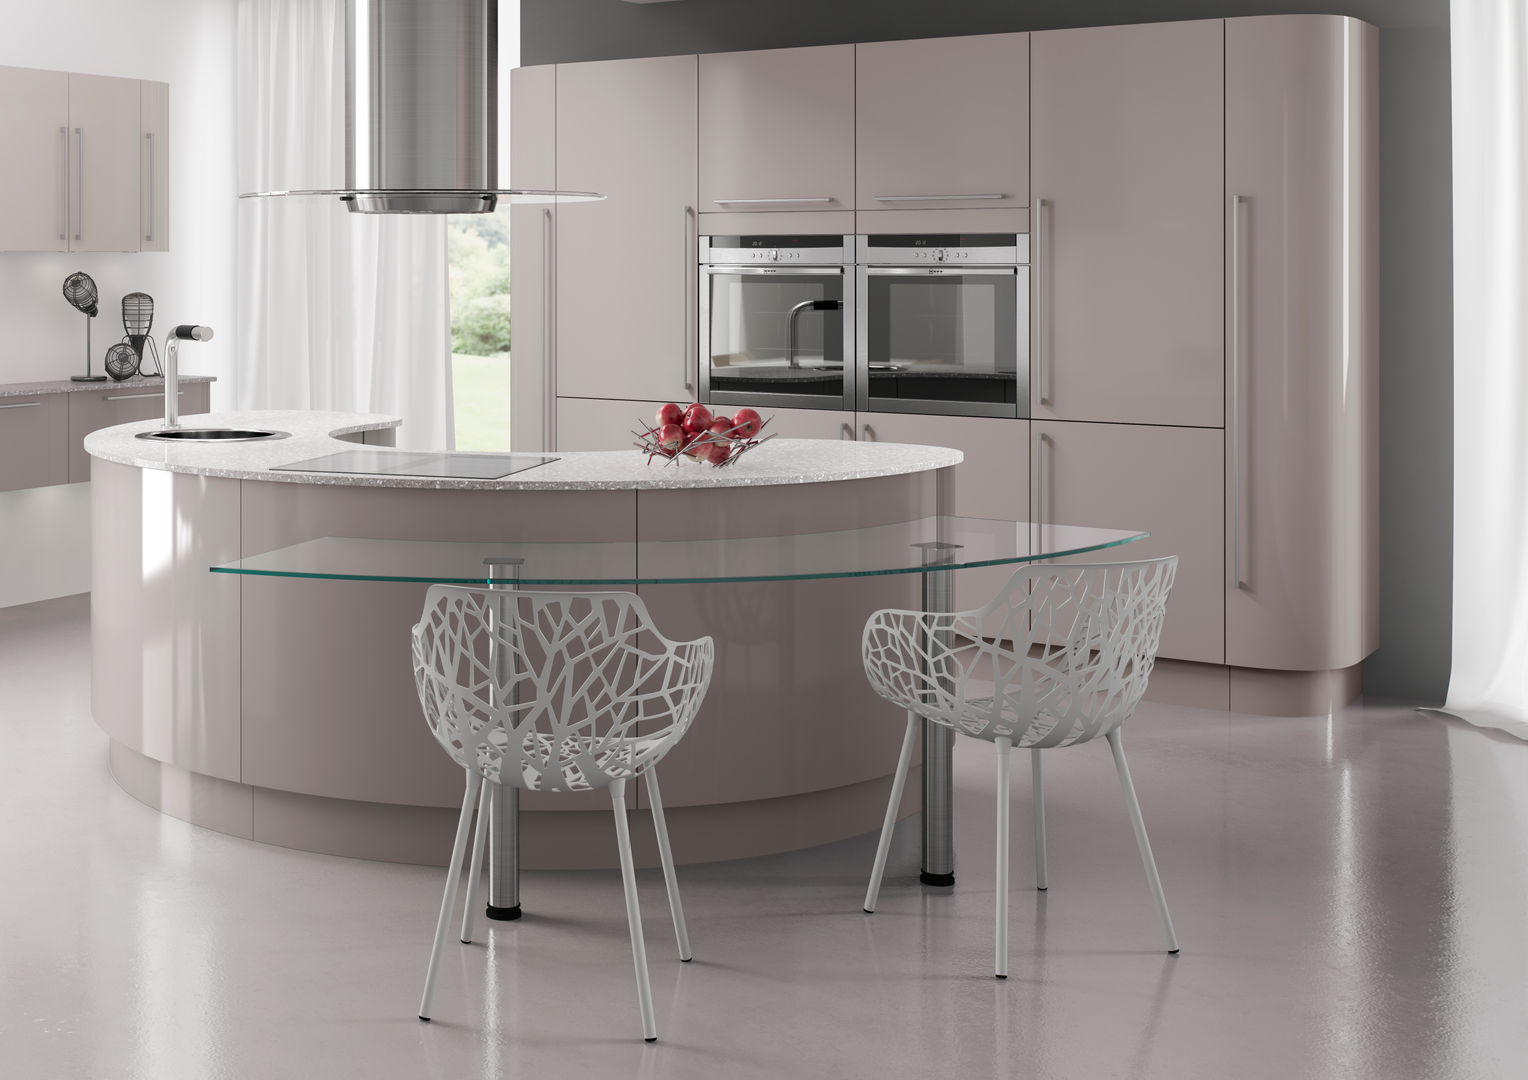 Nixon Gloss Island in Heritage Grey | Sigma 3 Kitchens Sigma 3 Kitchens Modern kitchen Cabinets & shelves